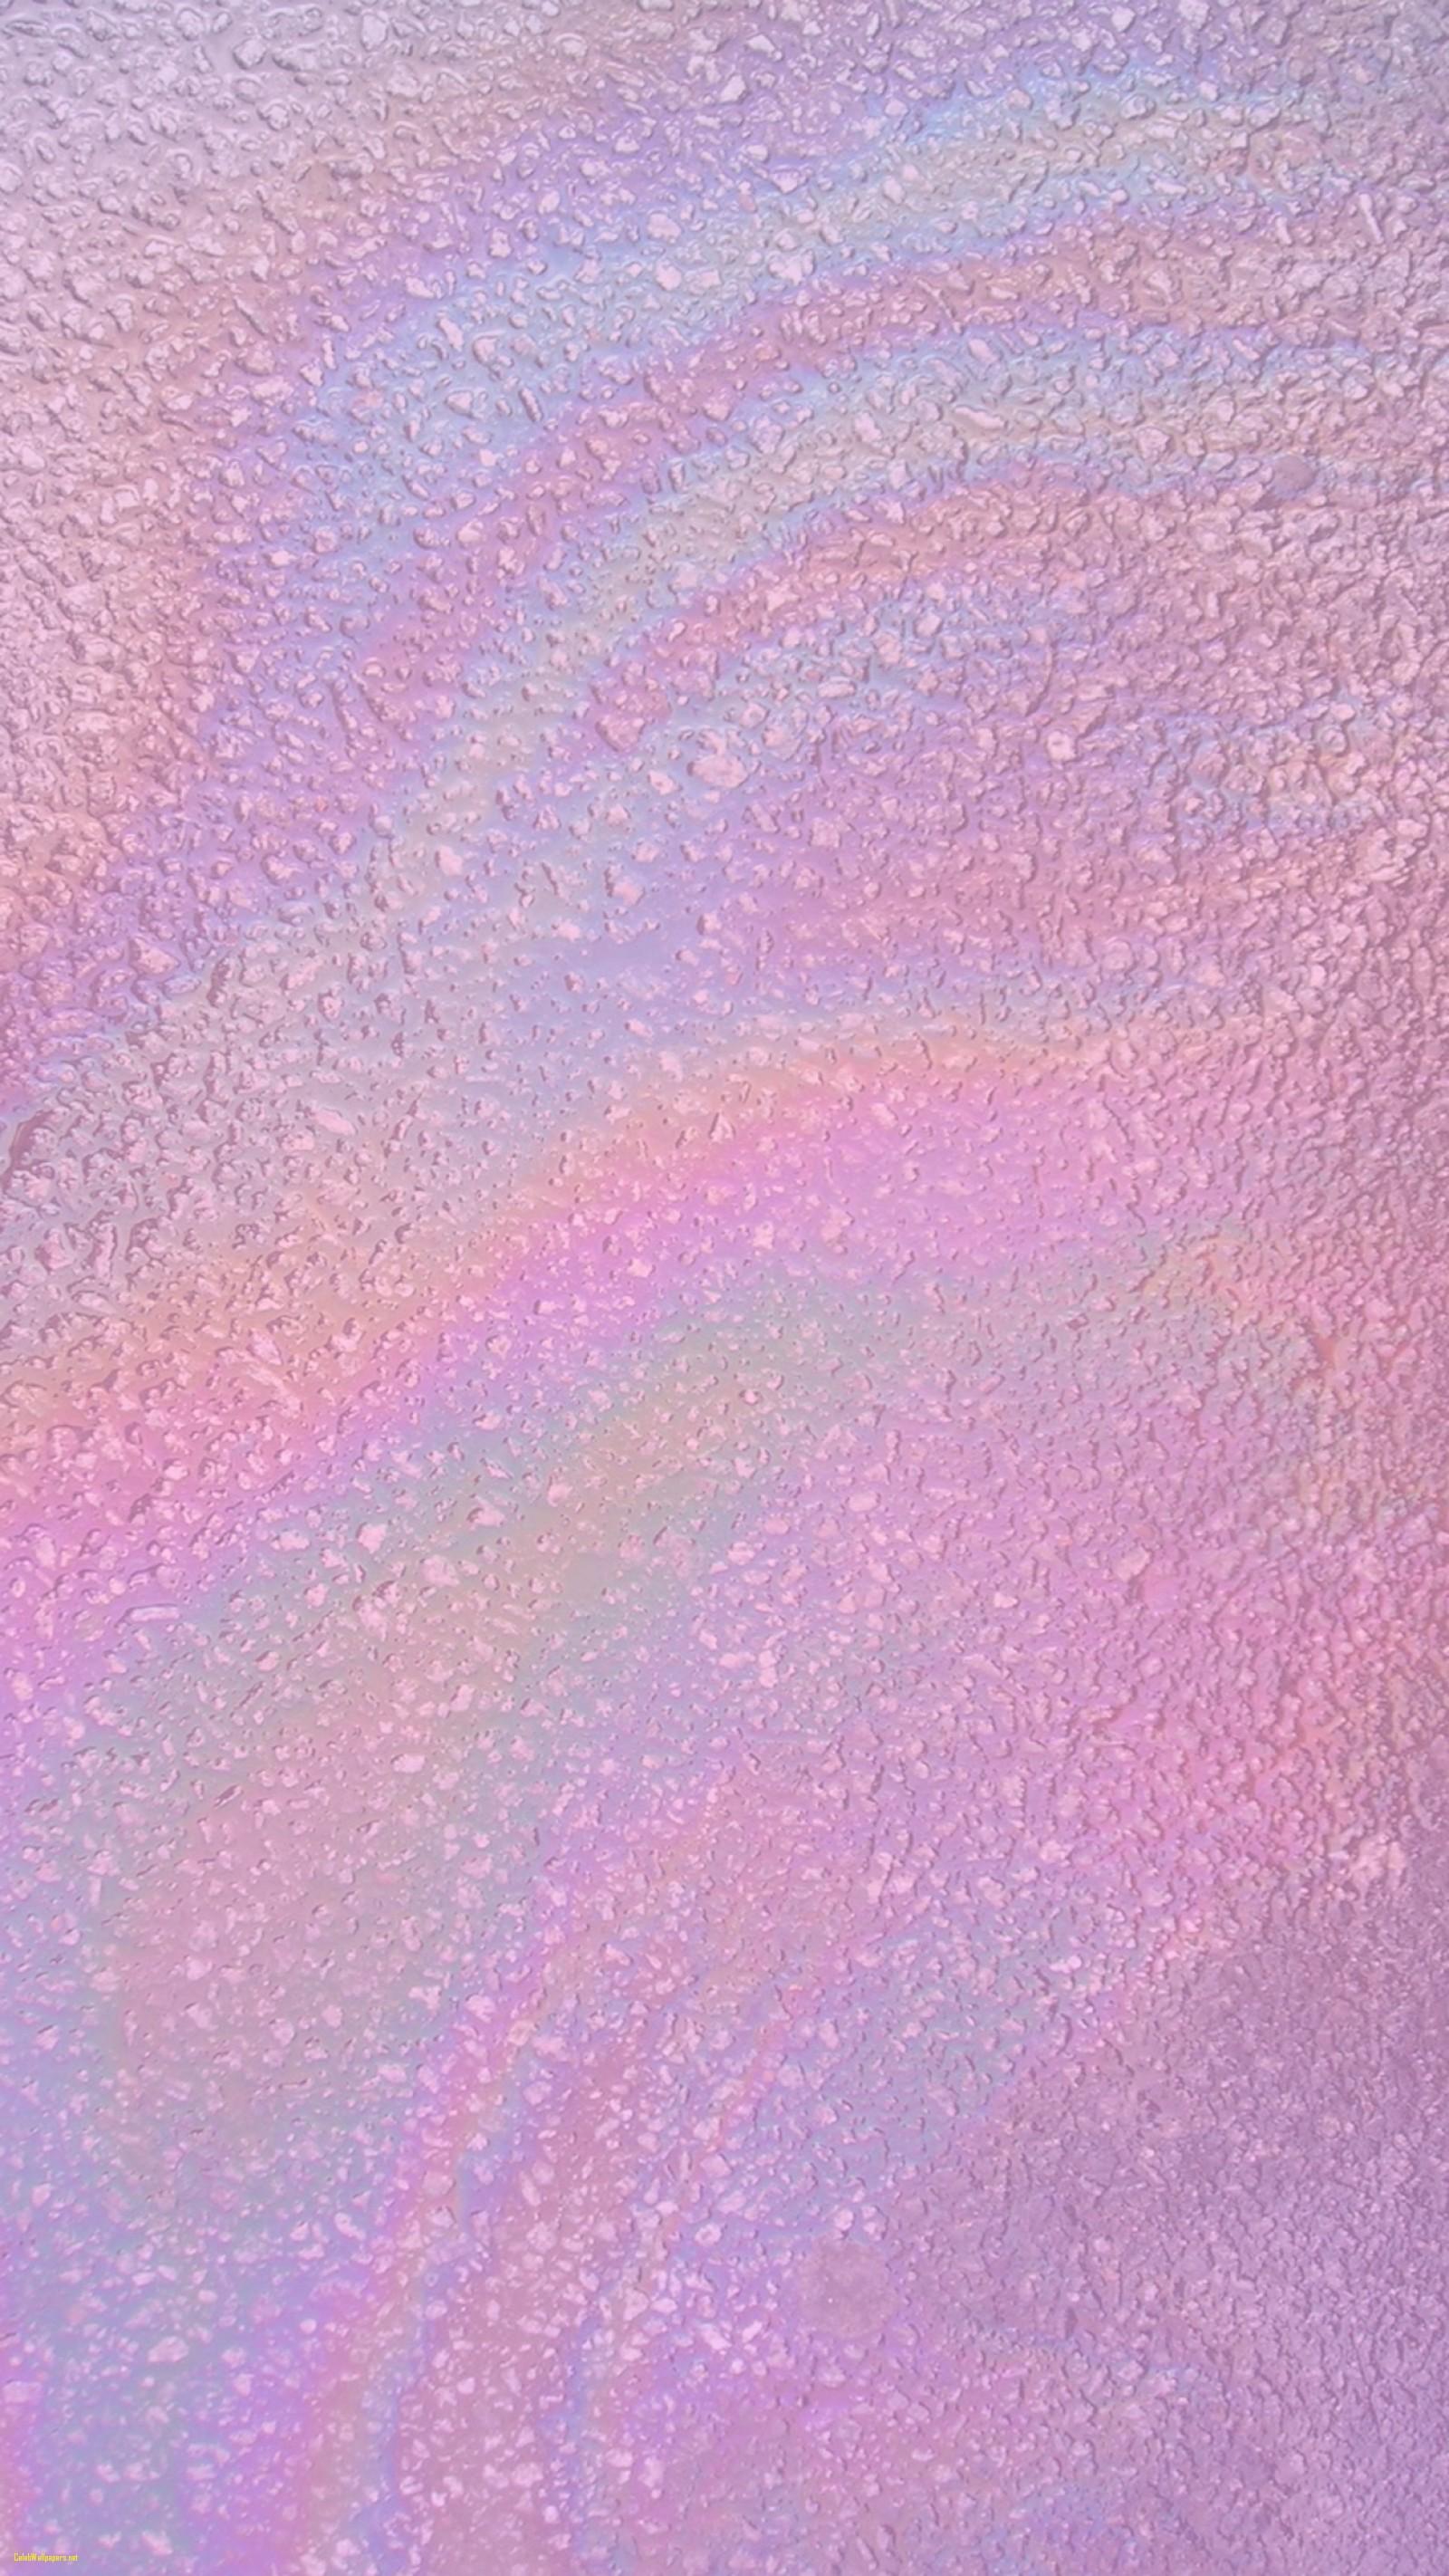 Hologram Wallpaper Hd - Pastel Pink And Purple Glitter - HD Wallpaper 